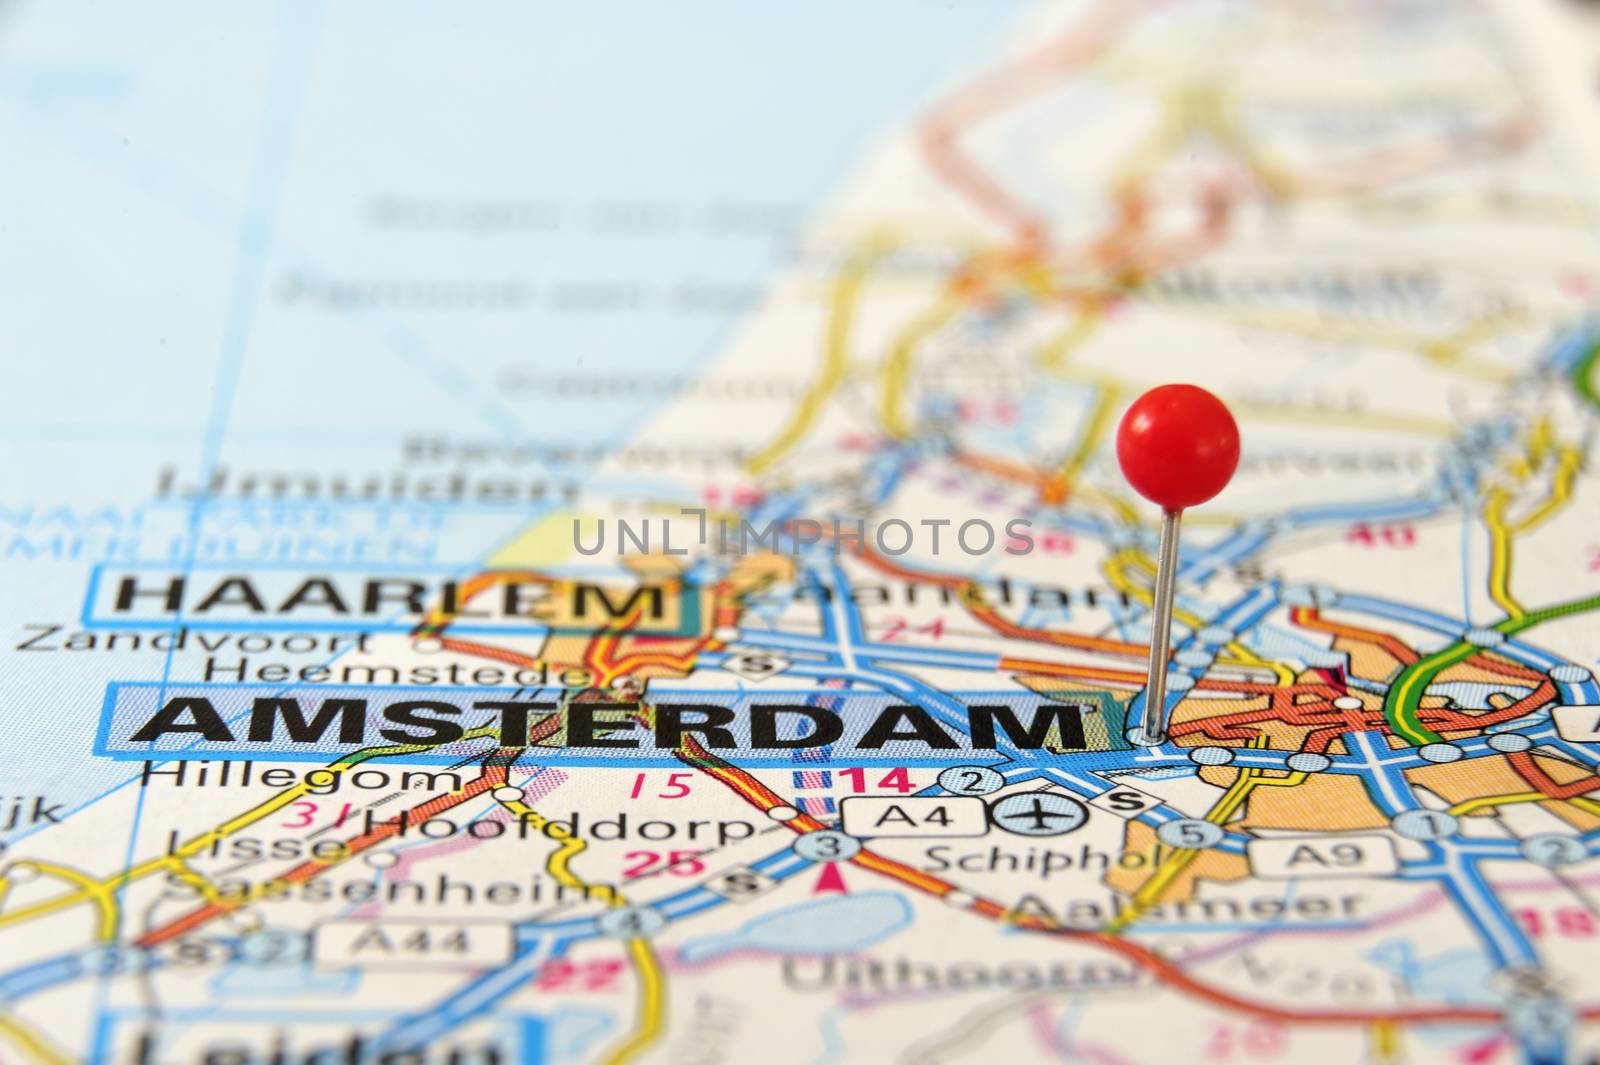 Travel destination amsterdam holland on the map